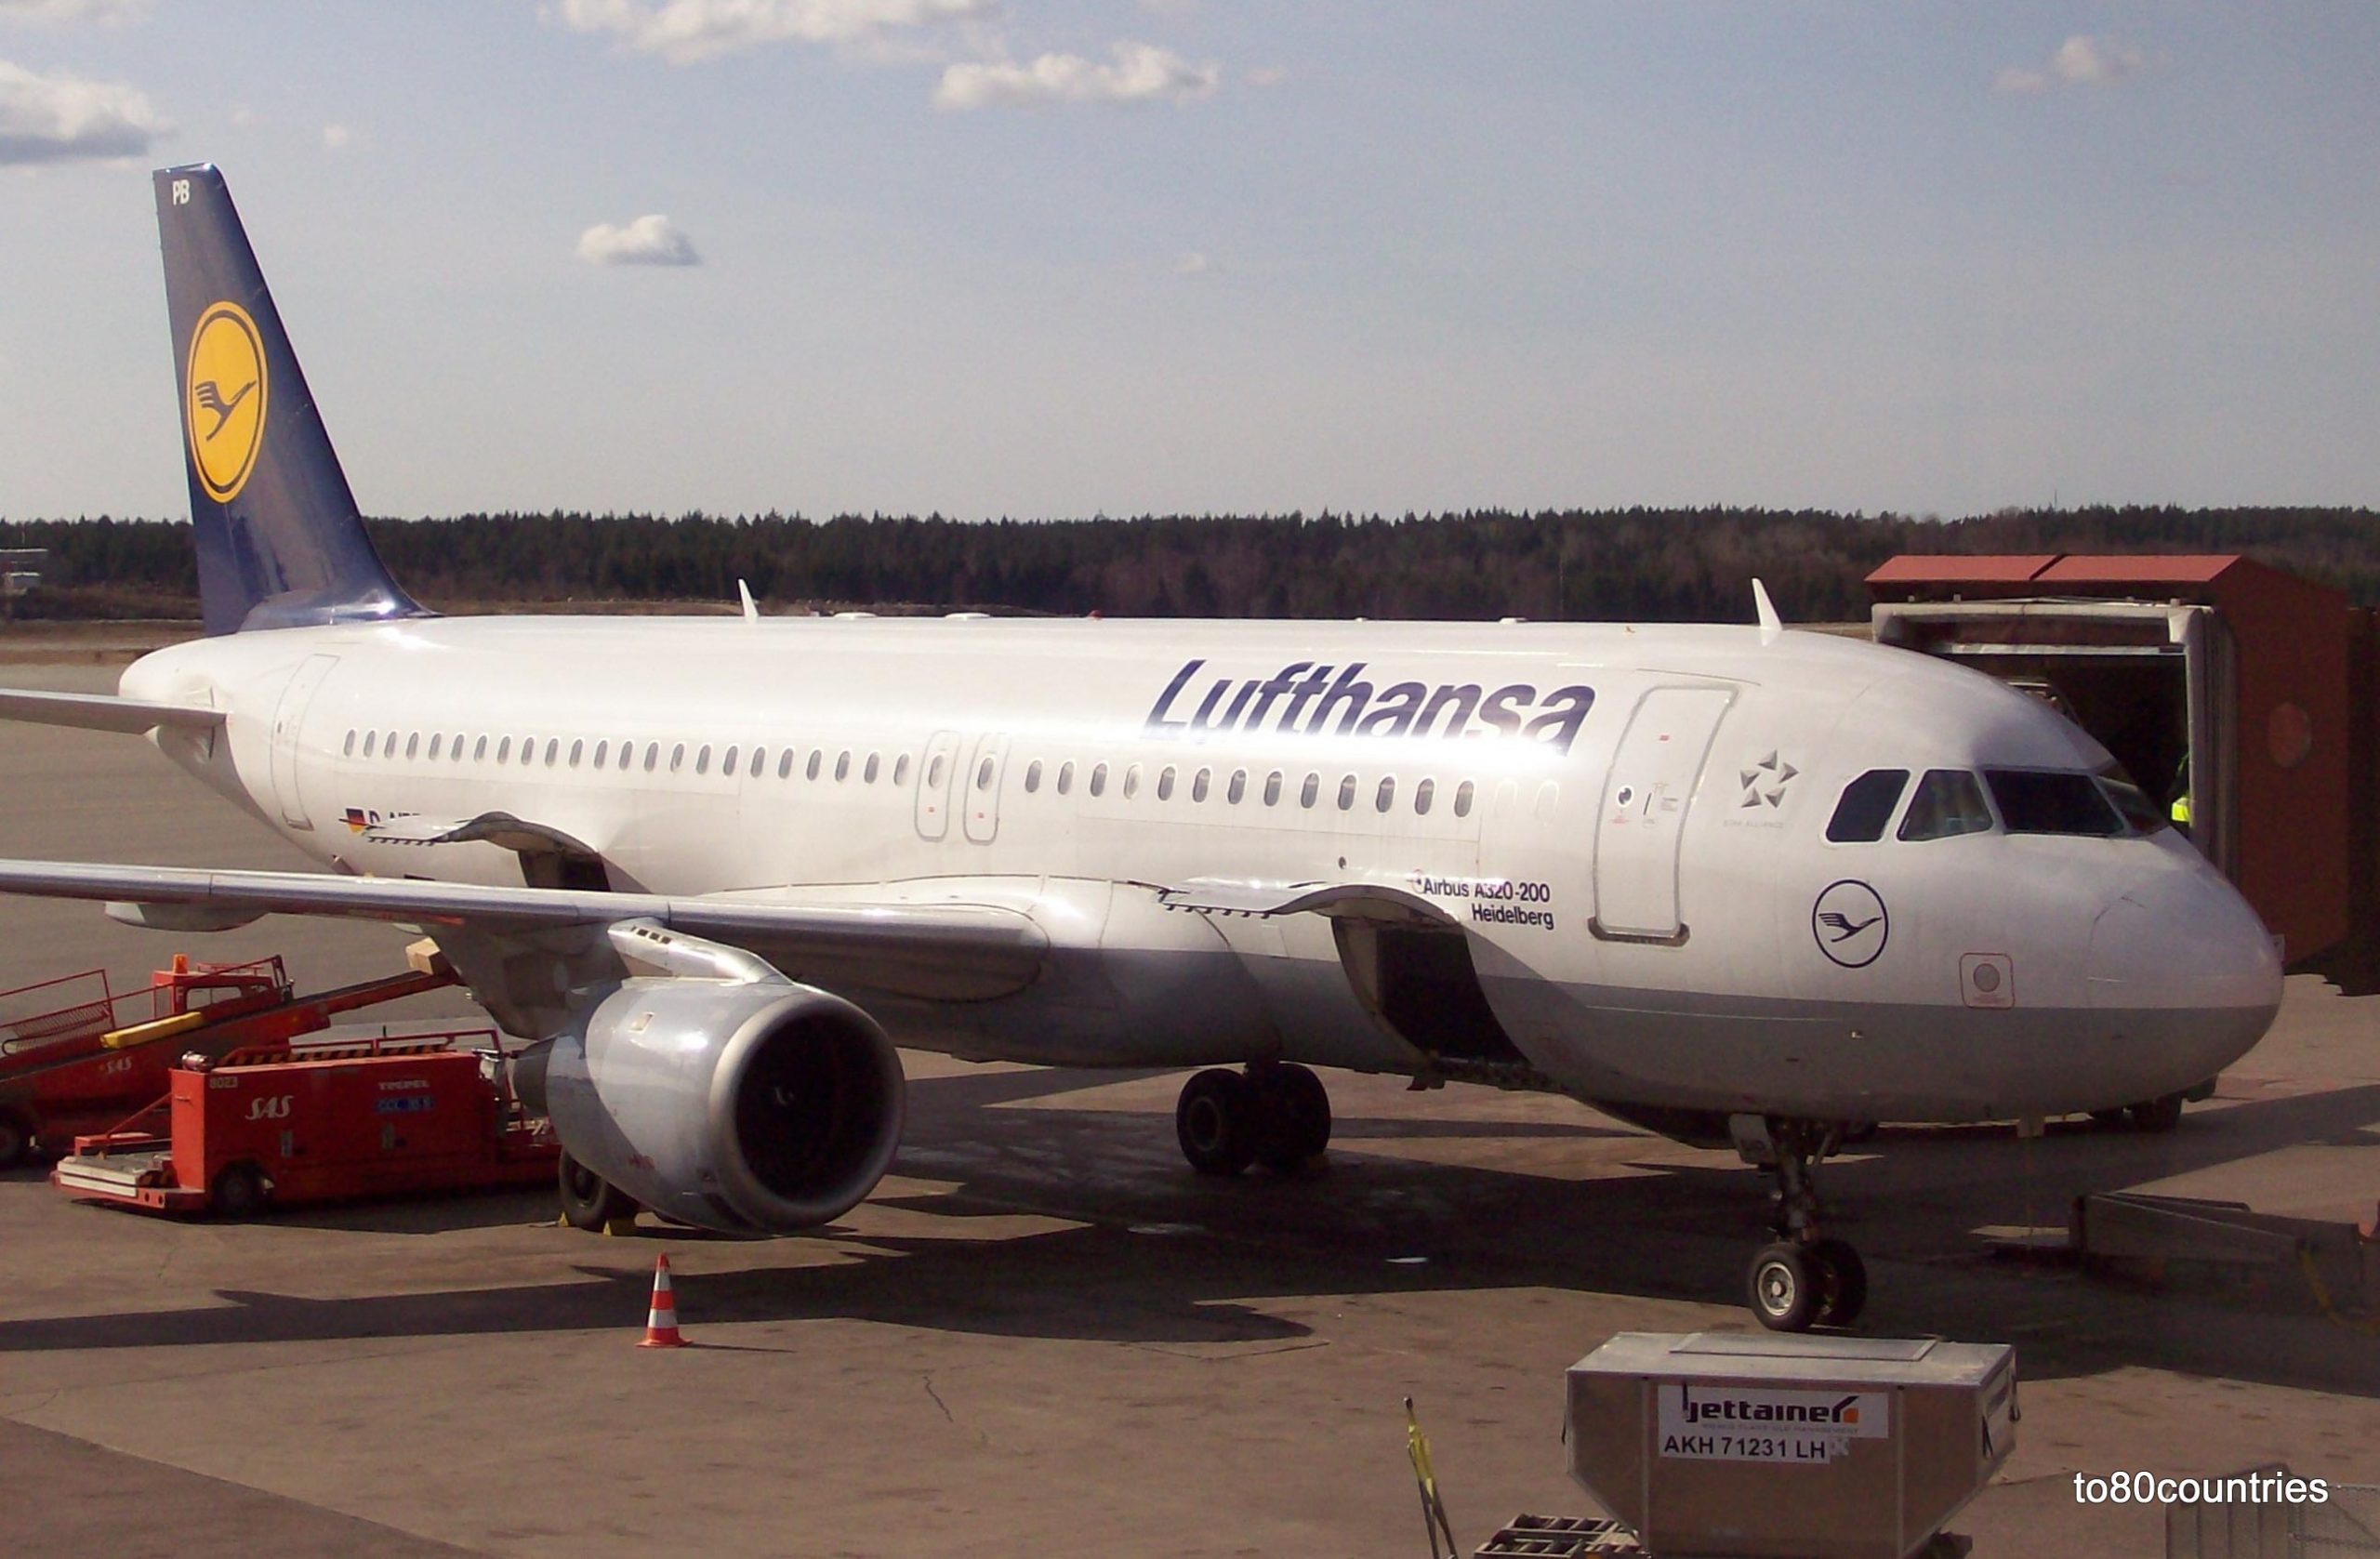 Lufthansa-Jet Airbus A320-200 "Heidelberg" in Stockholm-Arlanda